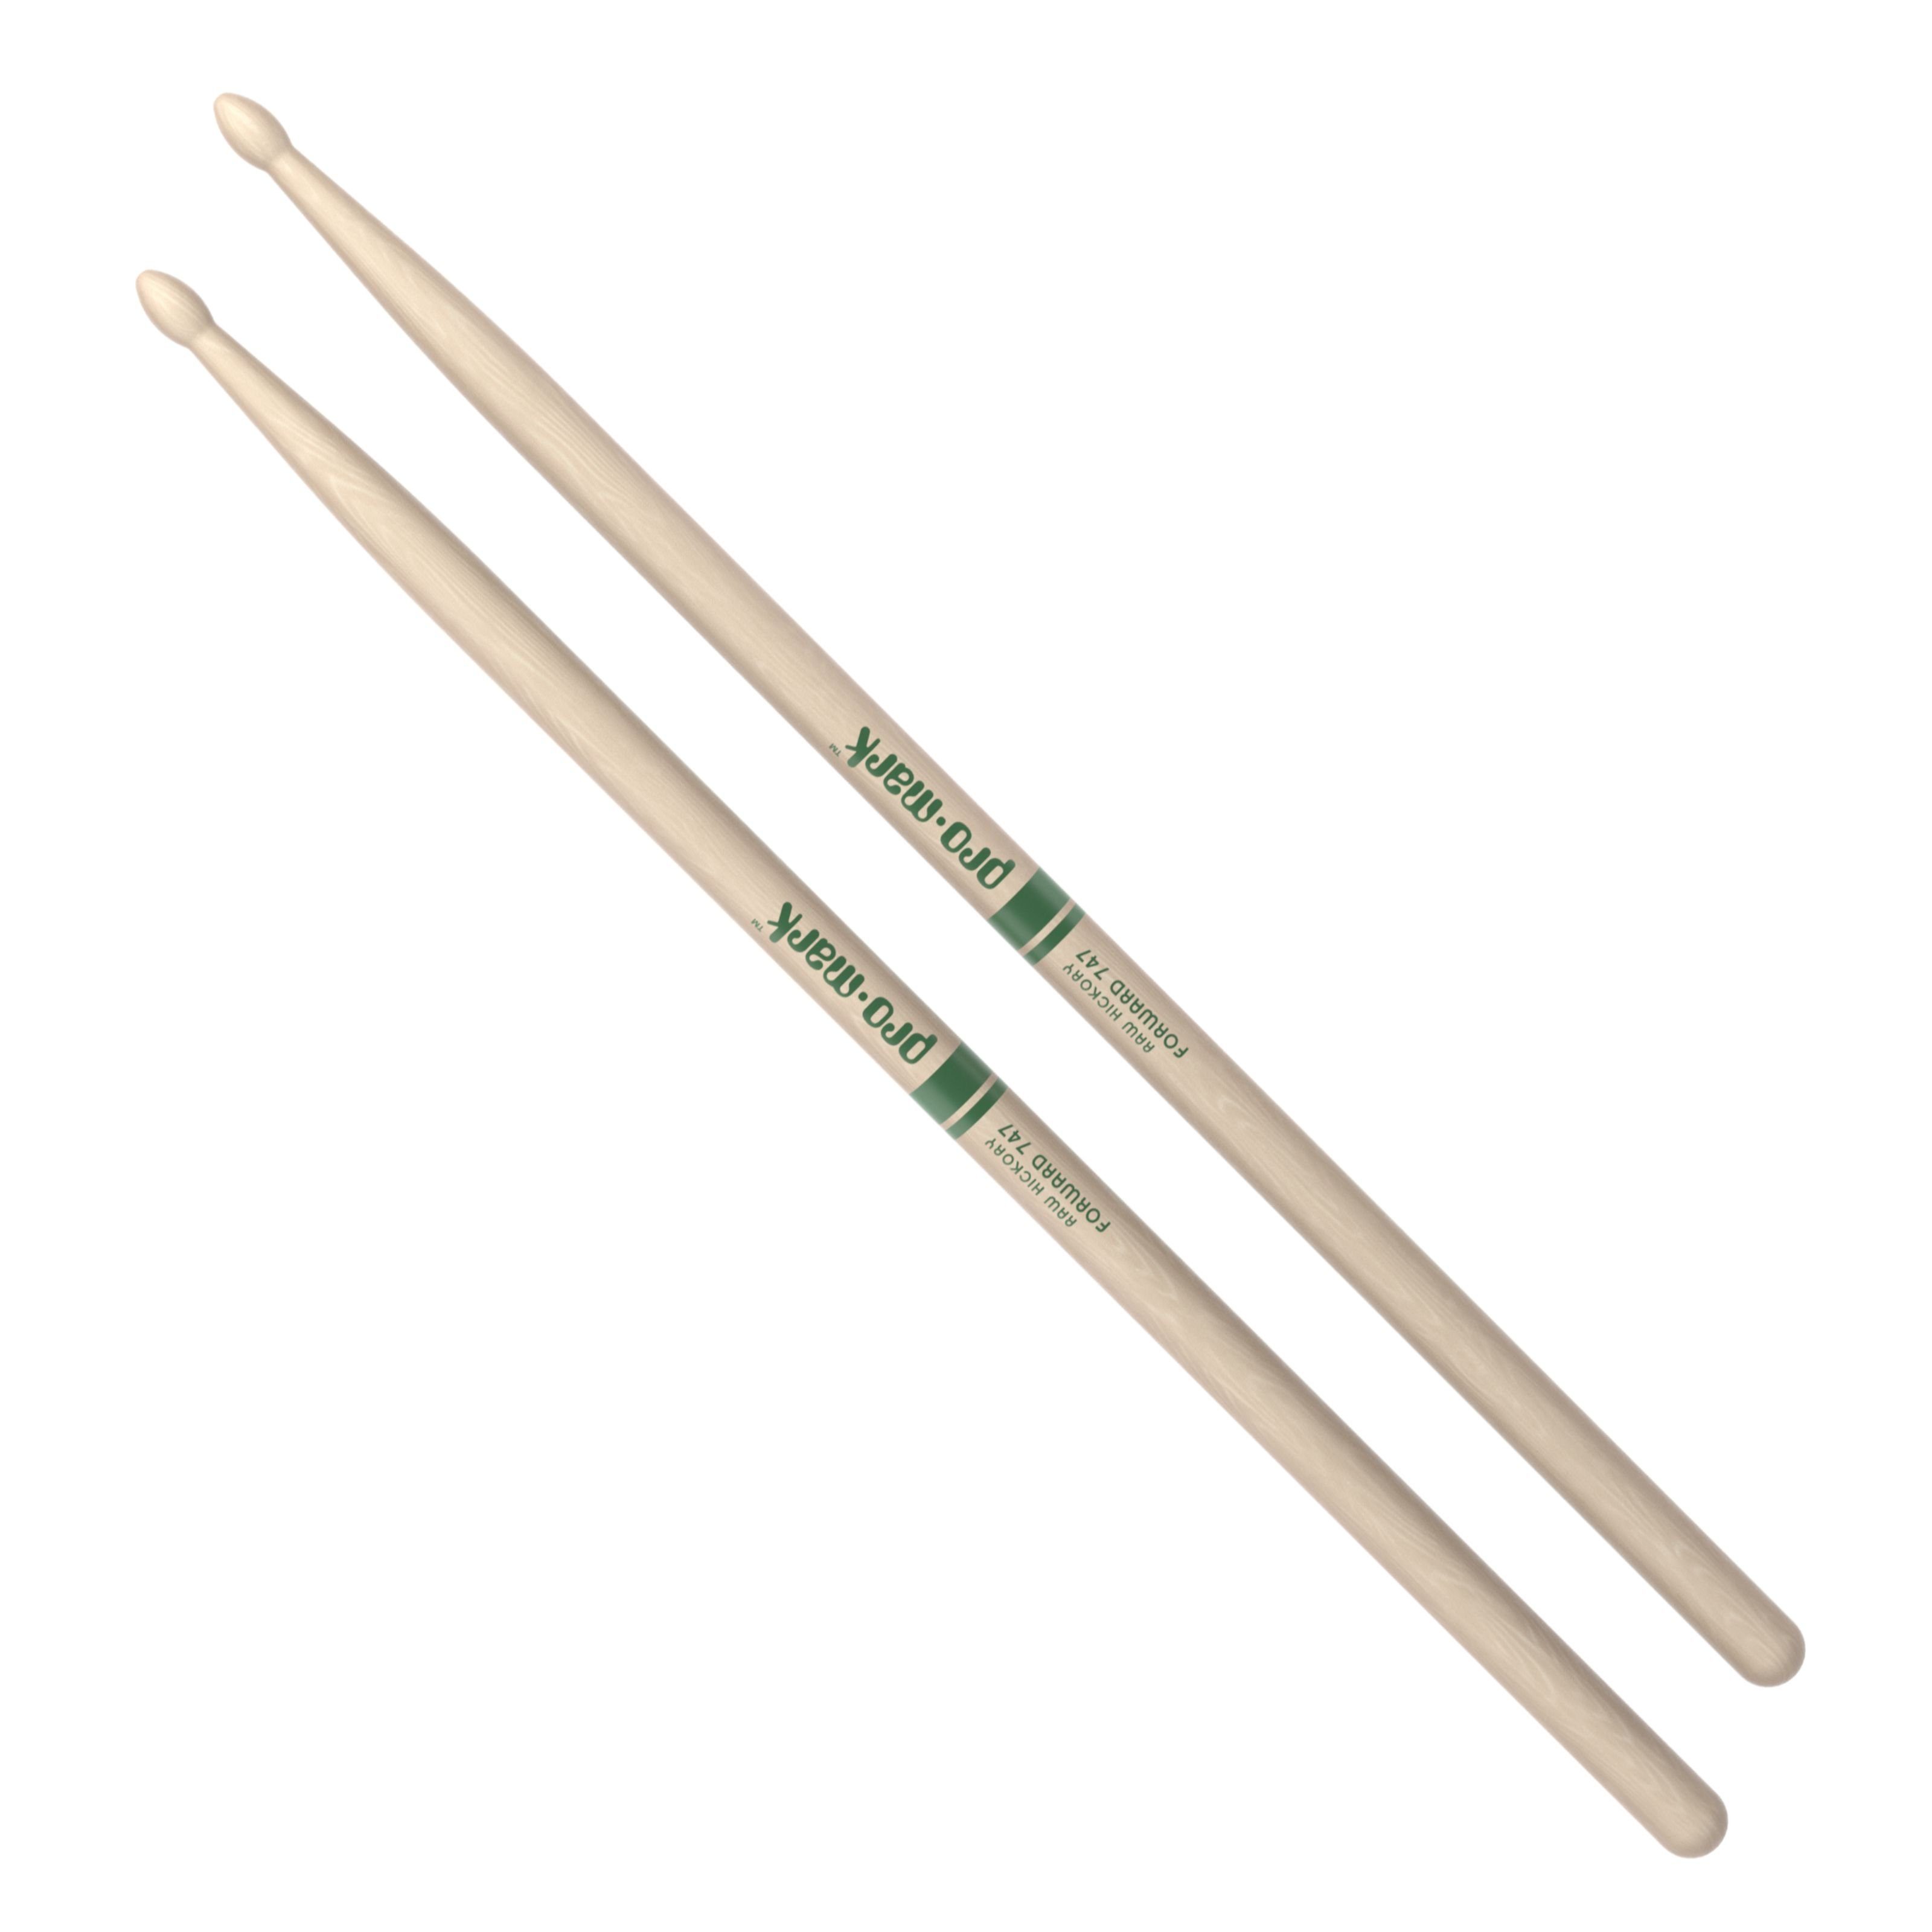 Spielzeug-Musikinstrument, TXR747W Rock - American Promark Drumstic Sticks Natural Hickory, WoodTip Paar Sticks,